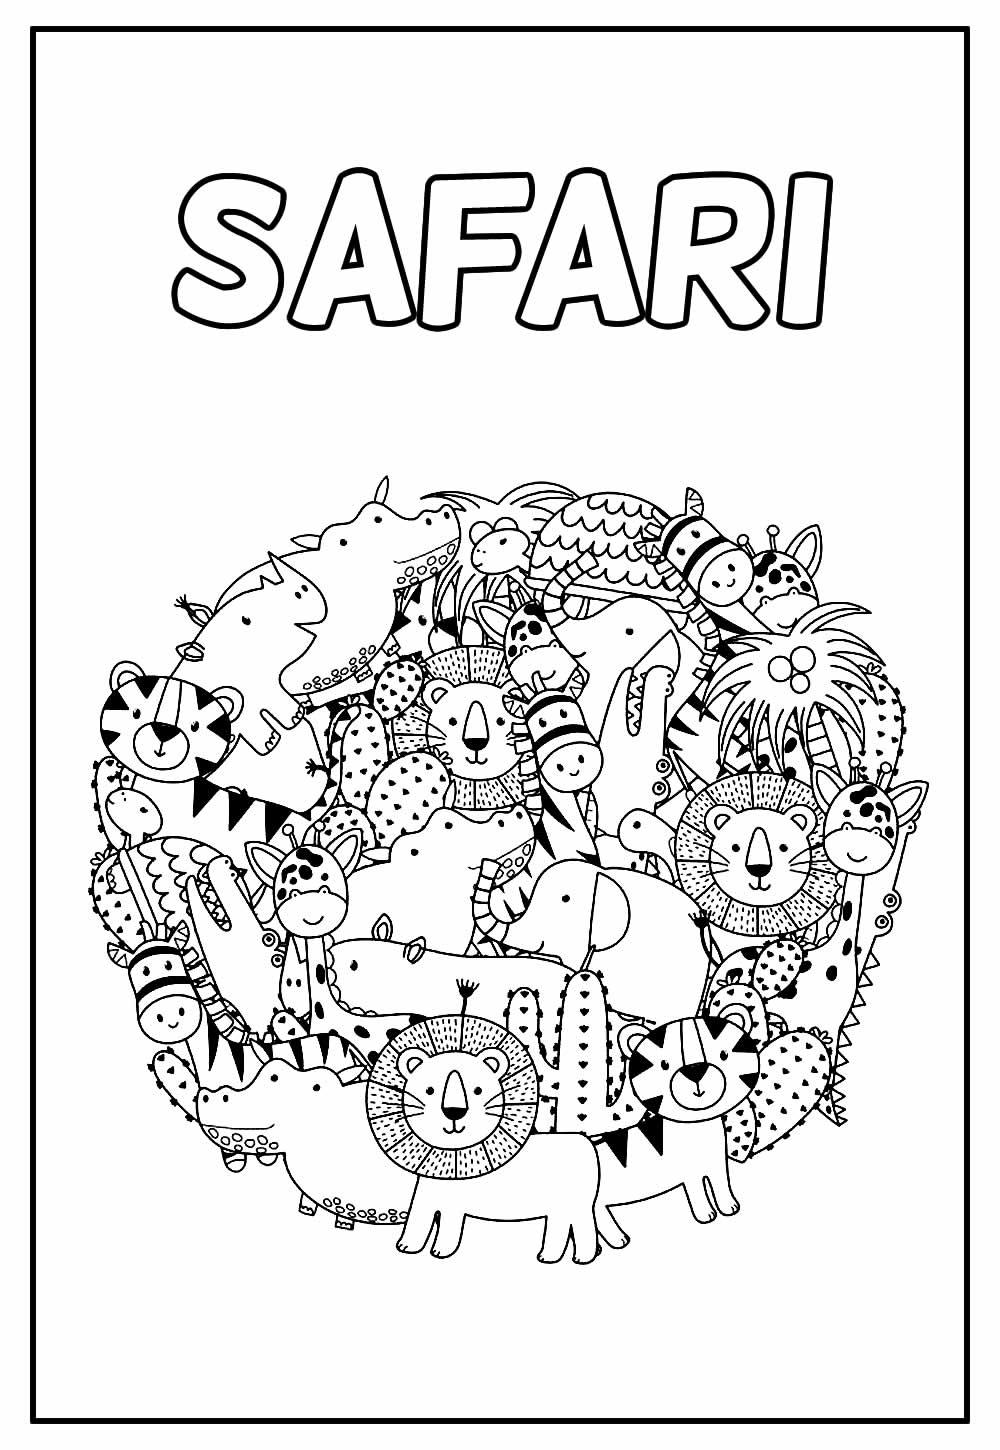 Desenho de Safari para colorir